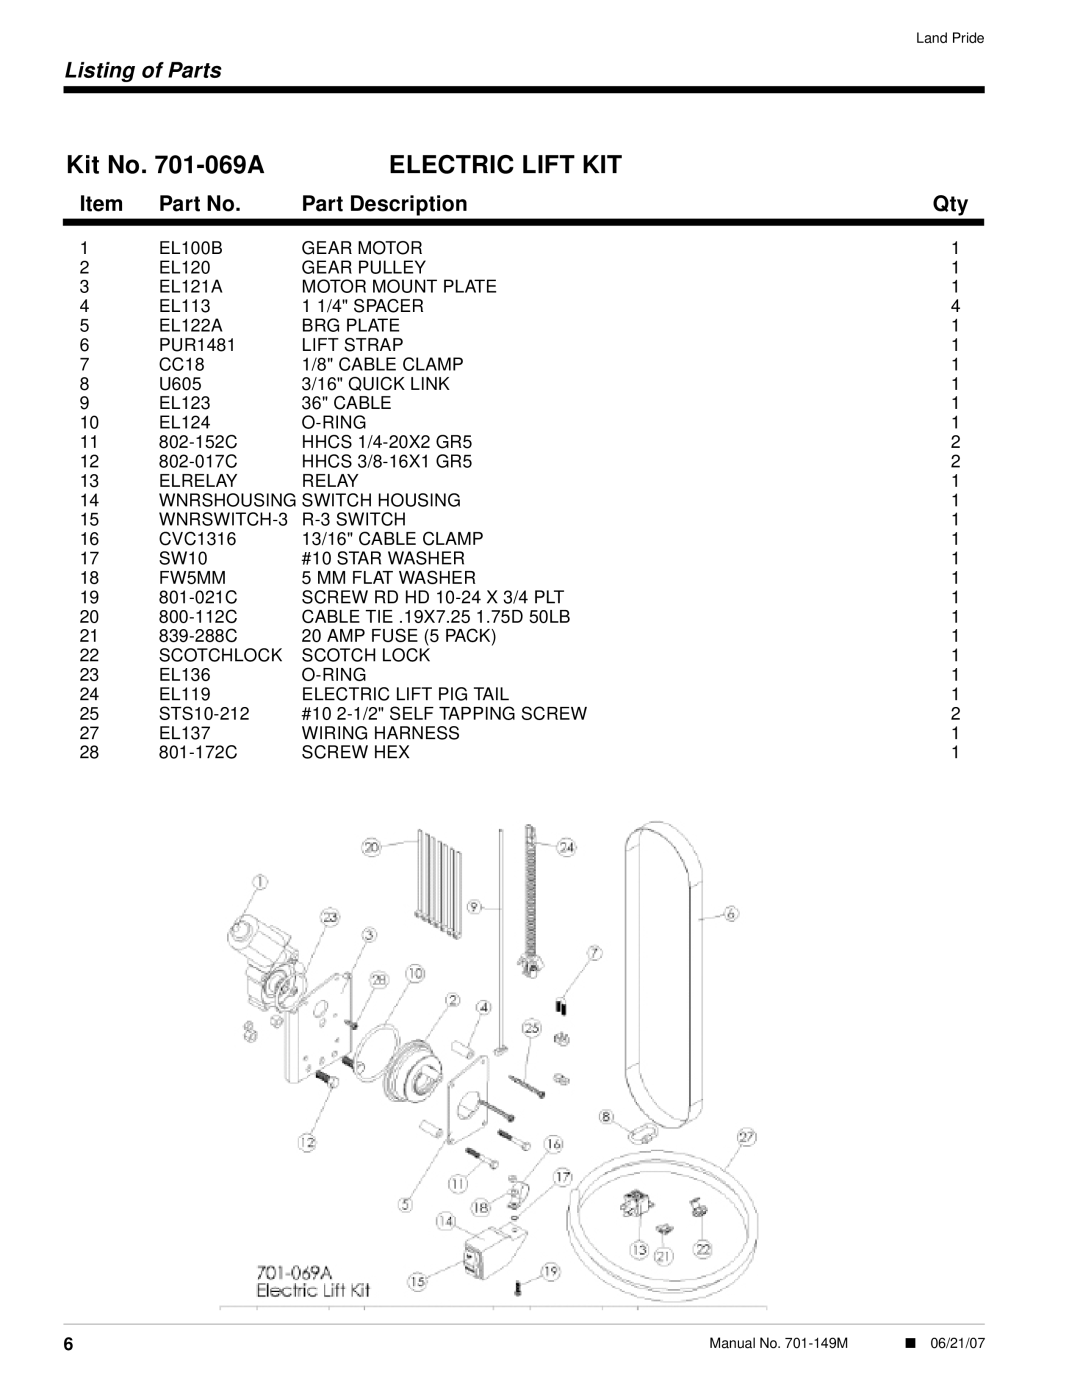 Land Pride NT Series, ST Series Kit No. 701-069A, Electric Lift Kit, Listing of Parts, Part Description 